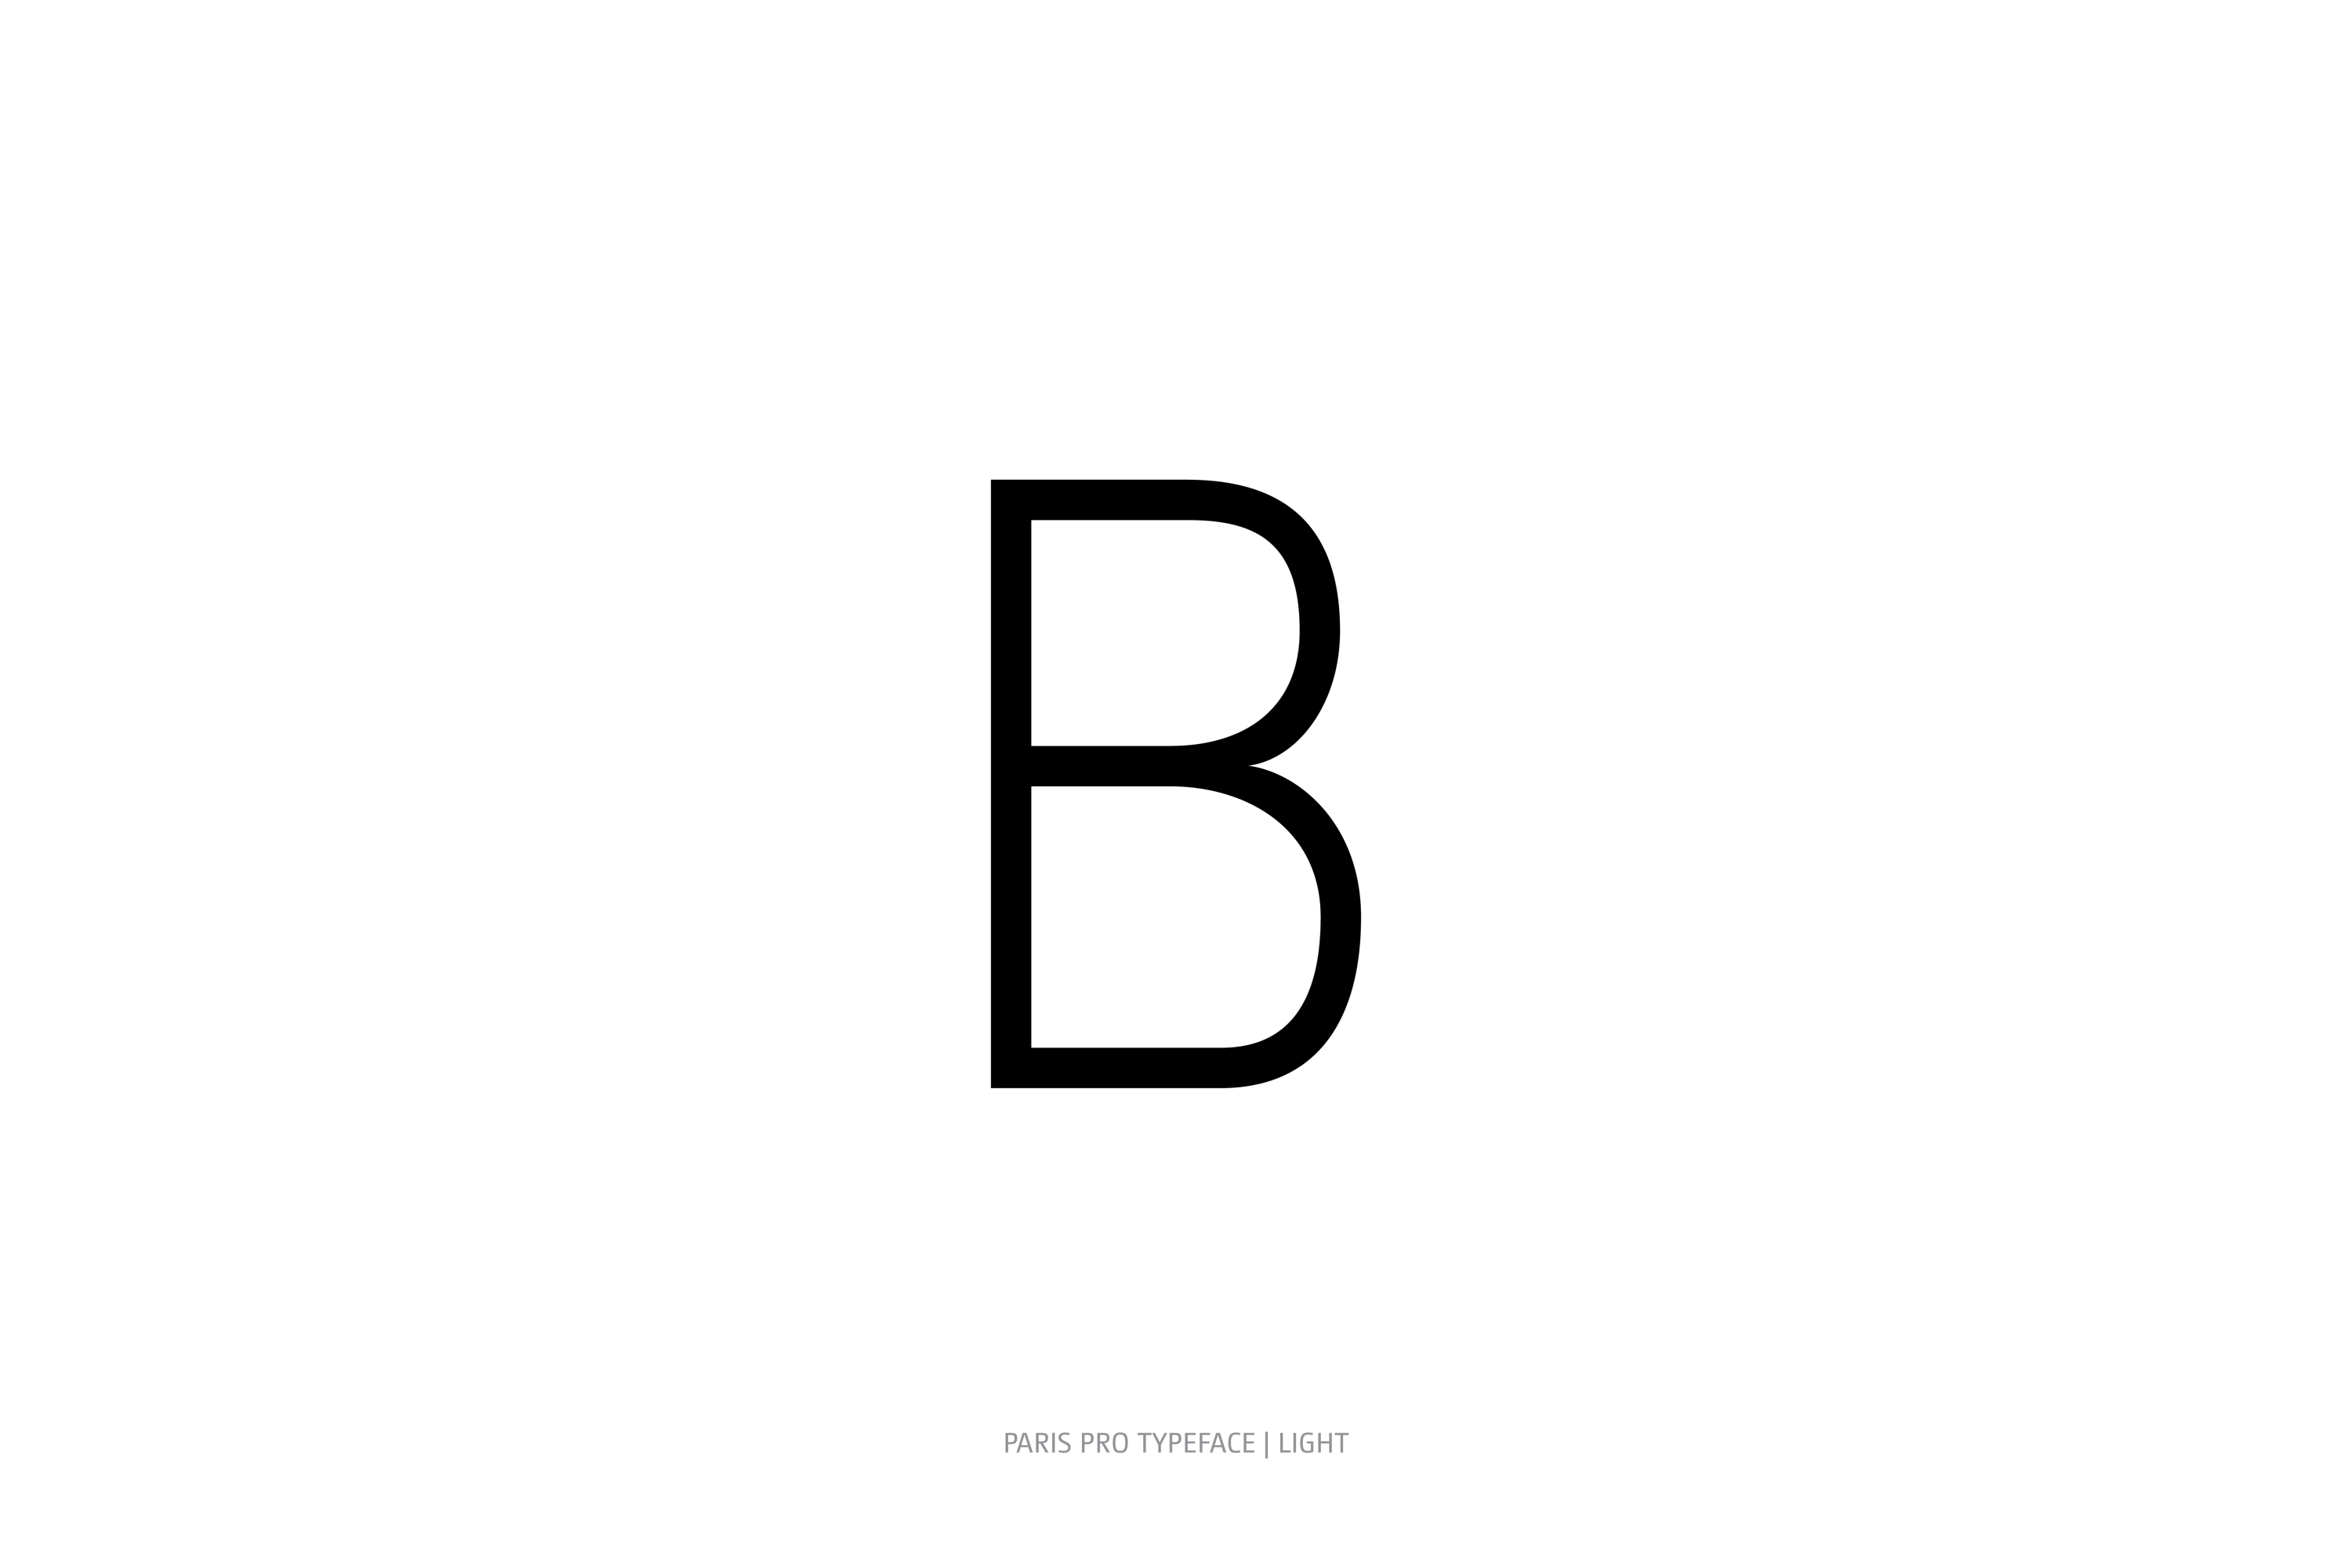 Paris Pro Typeface Light Style B